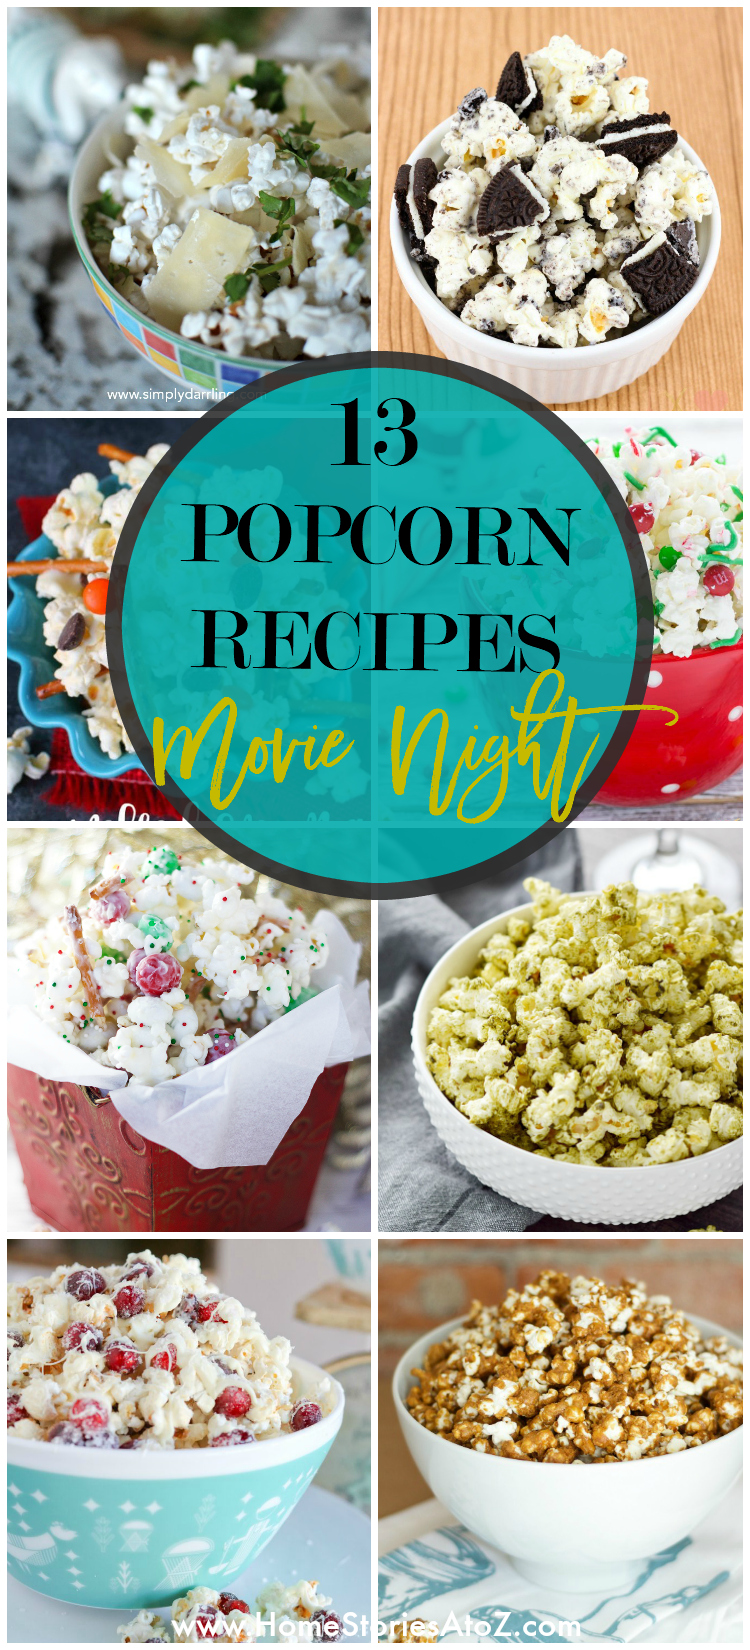 100+ Appetizer Ideas - Popcorn Recipes